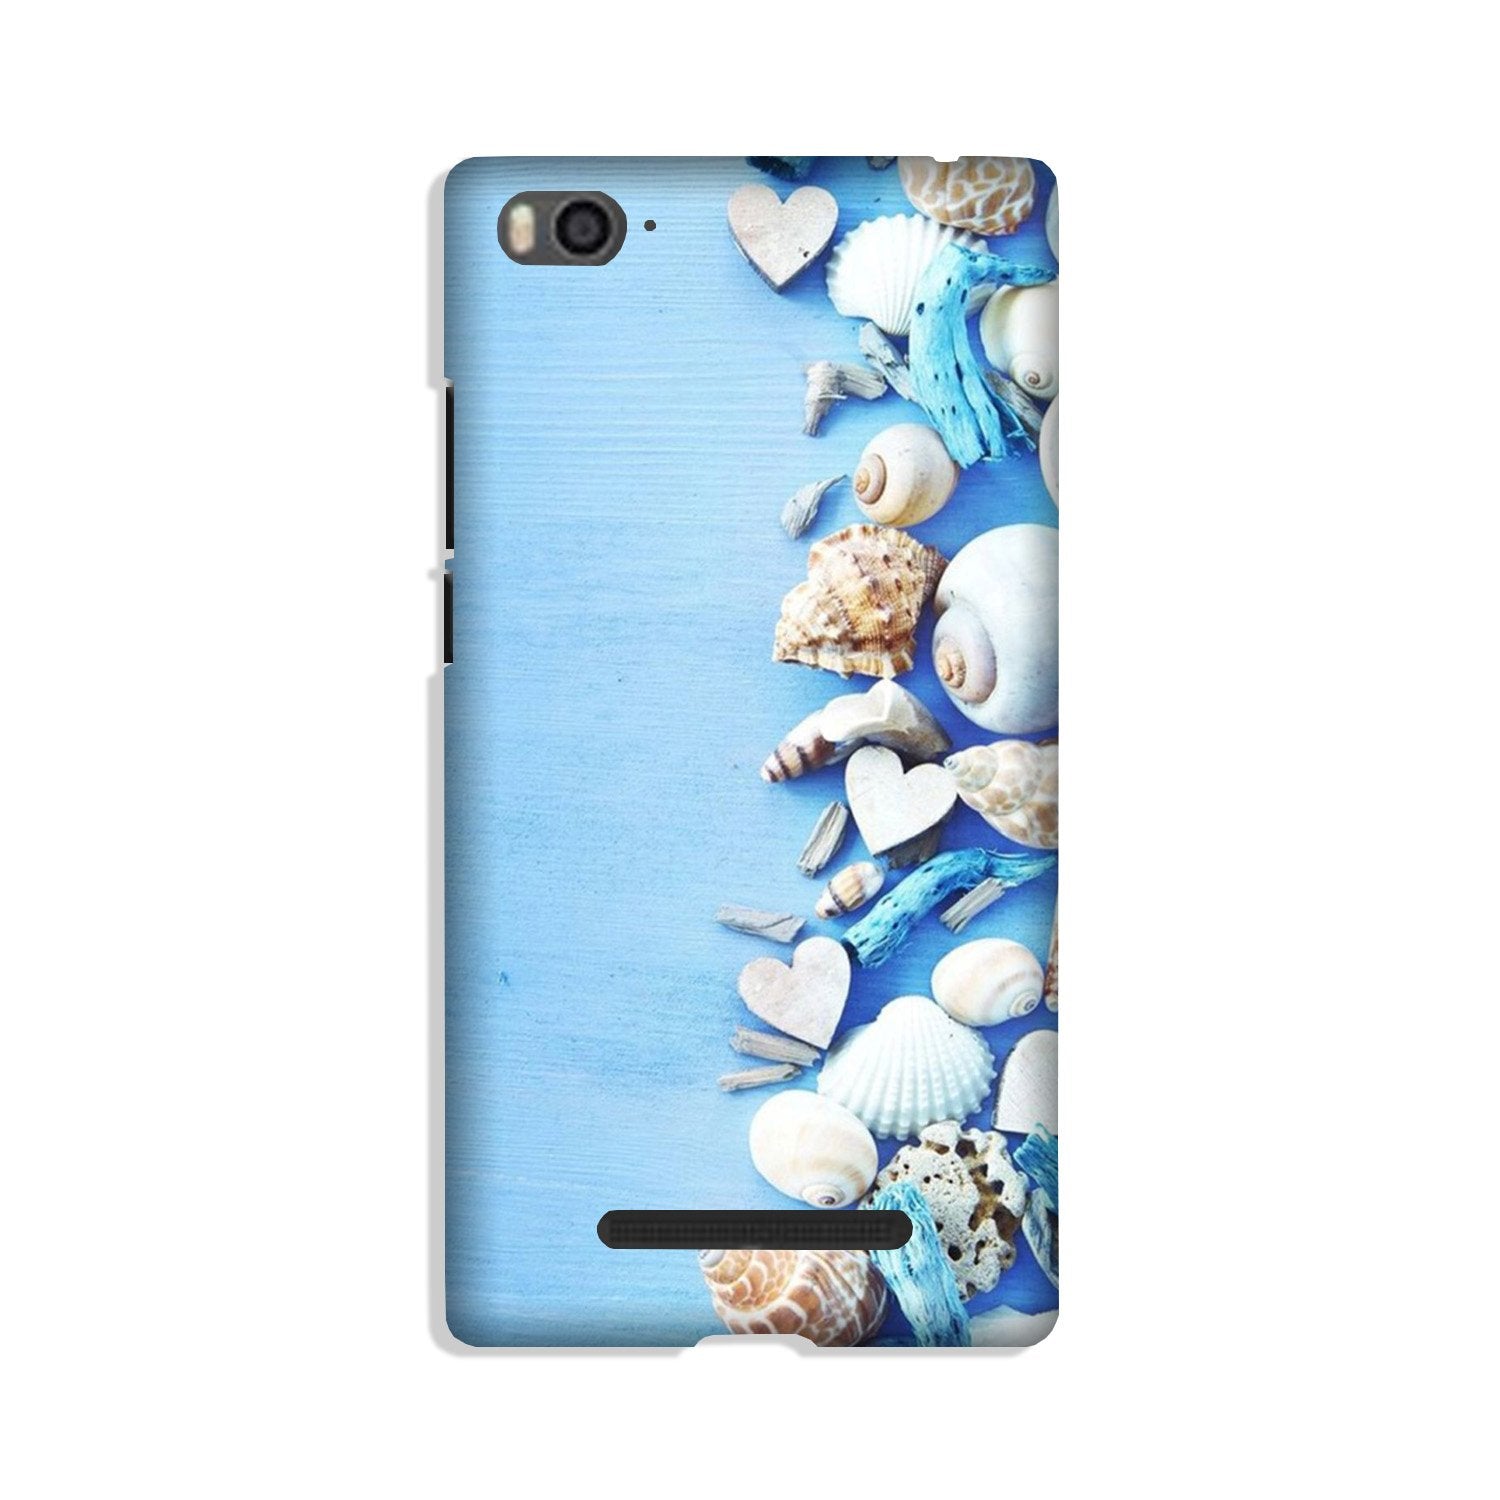 Sea Shells2 Case for Xiaomi Mi 4i